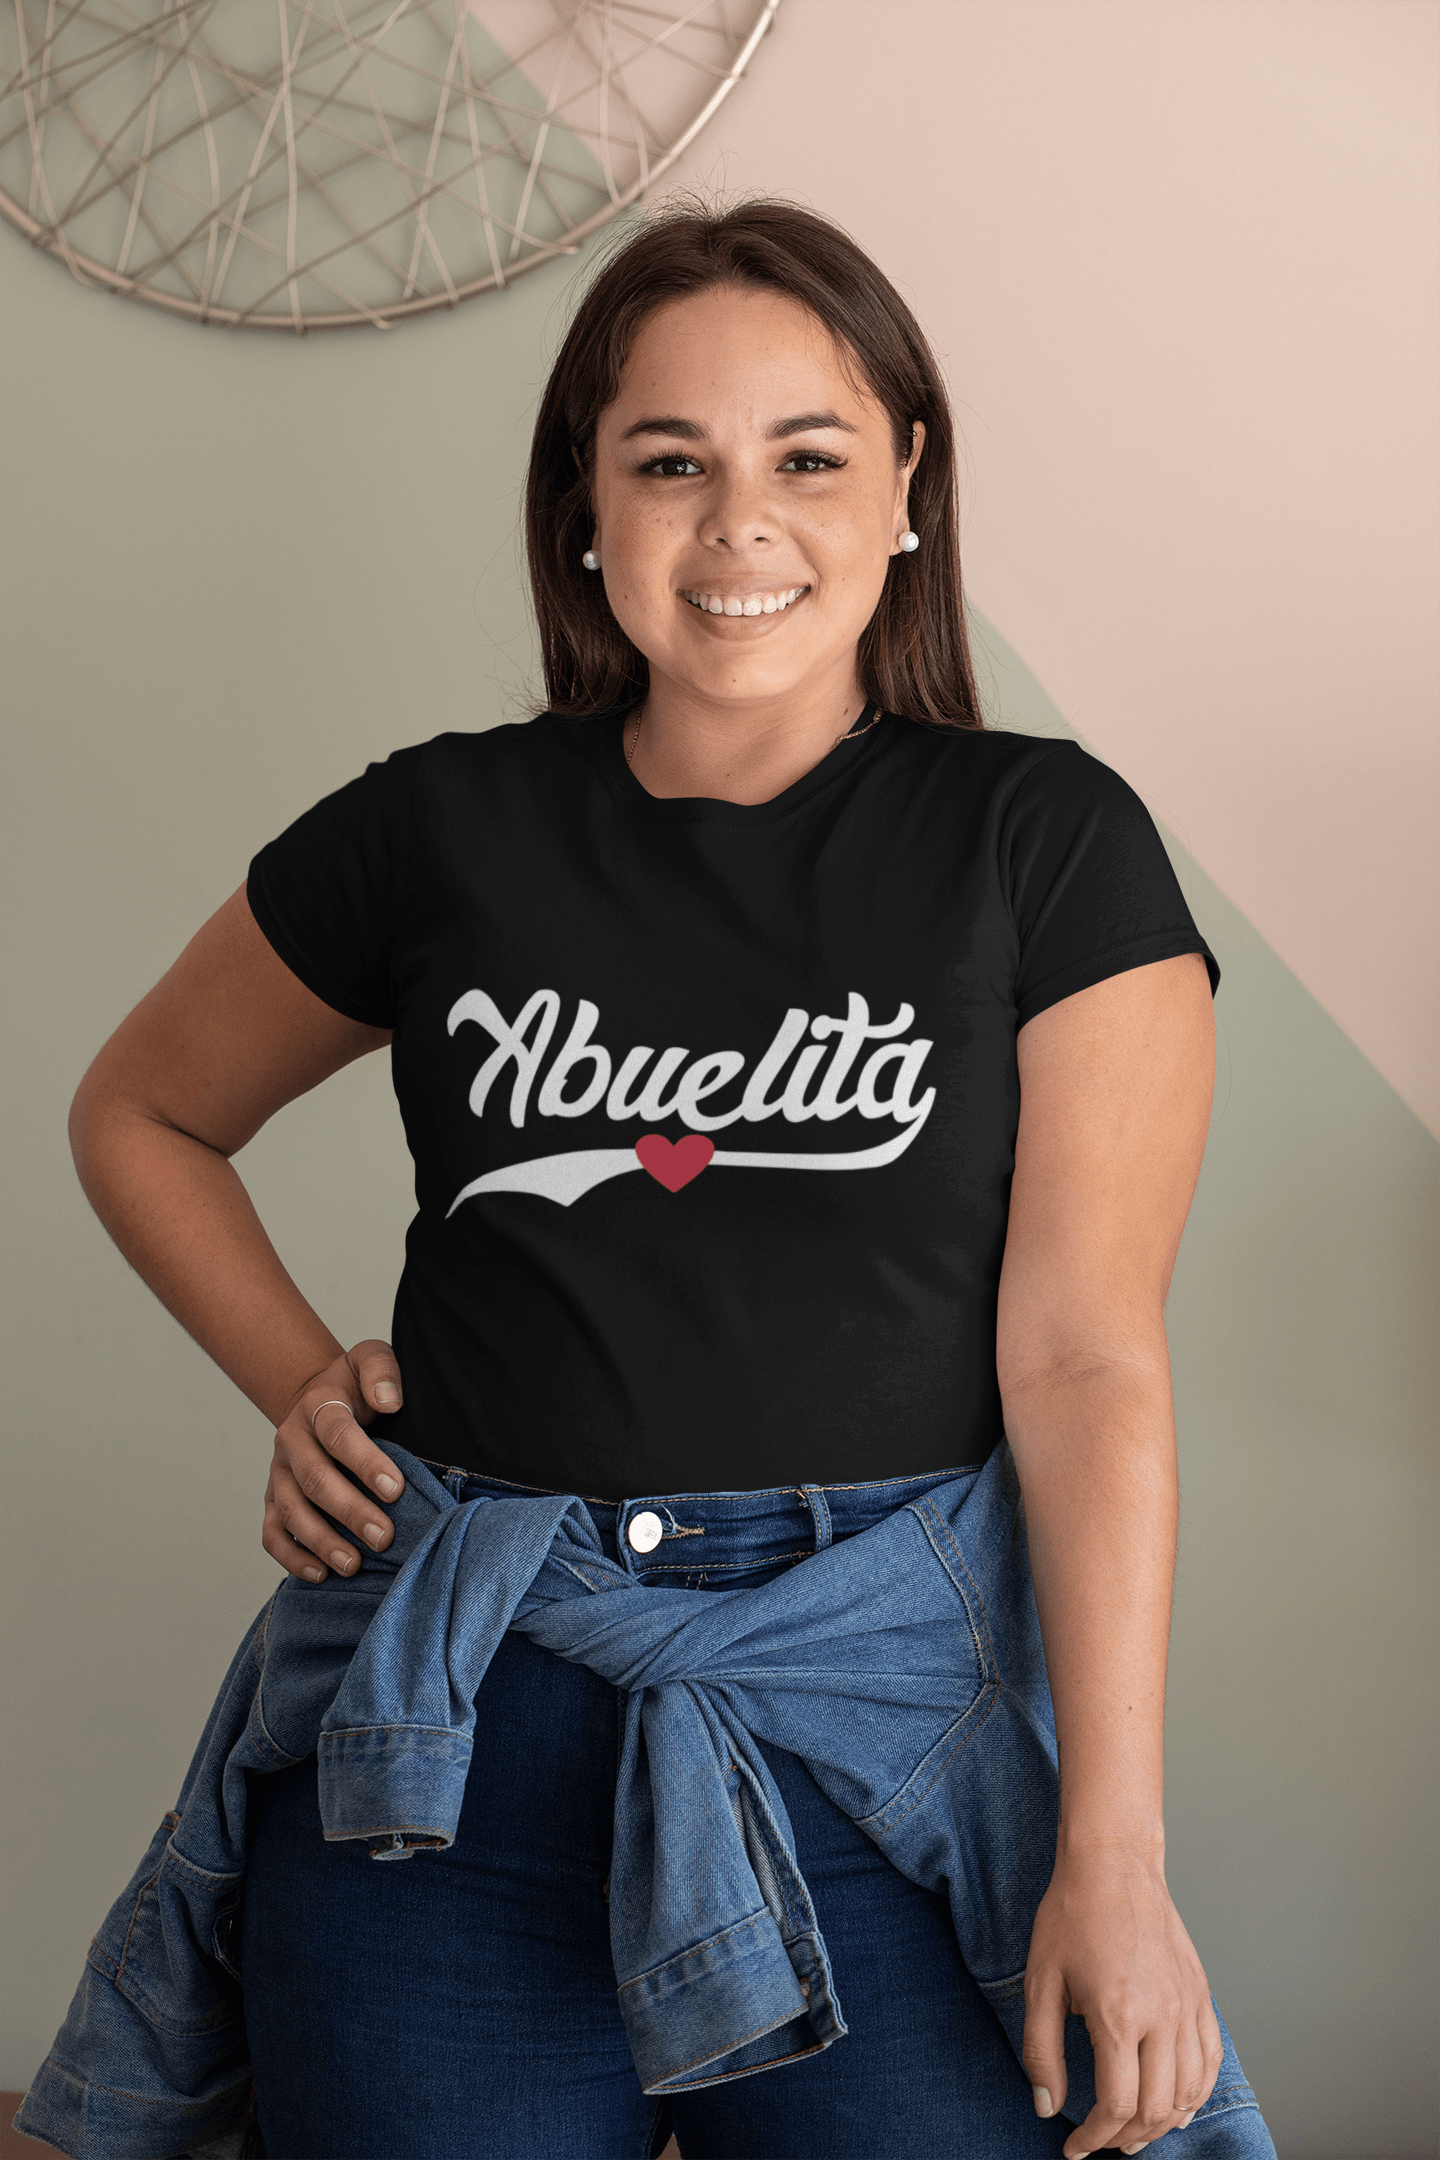 Ultrabasic - Tee-Shirt Femme Manches Courtes Abuelita Est. 2018